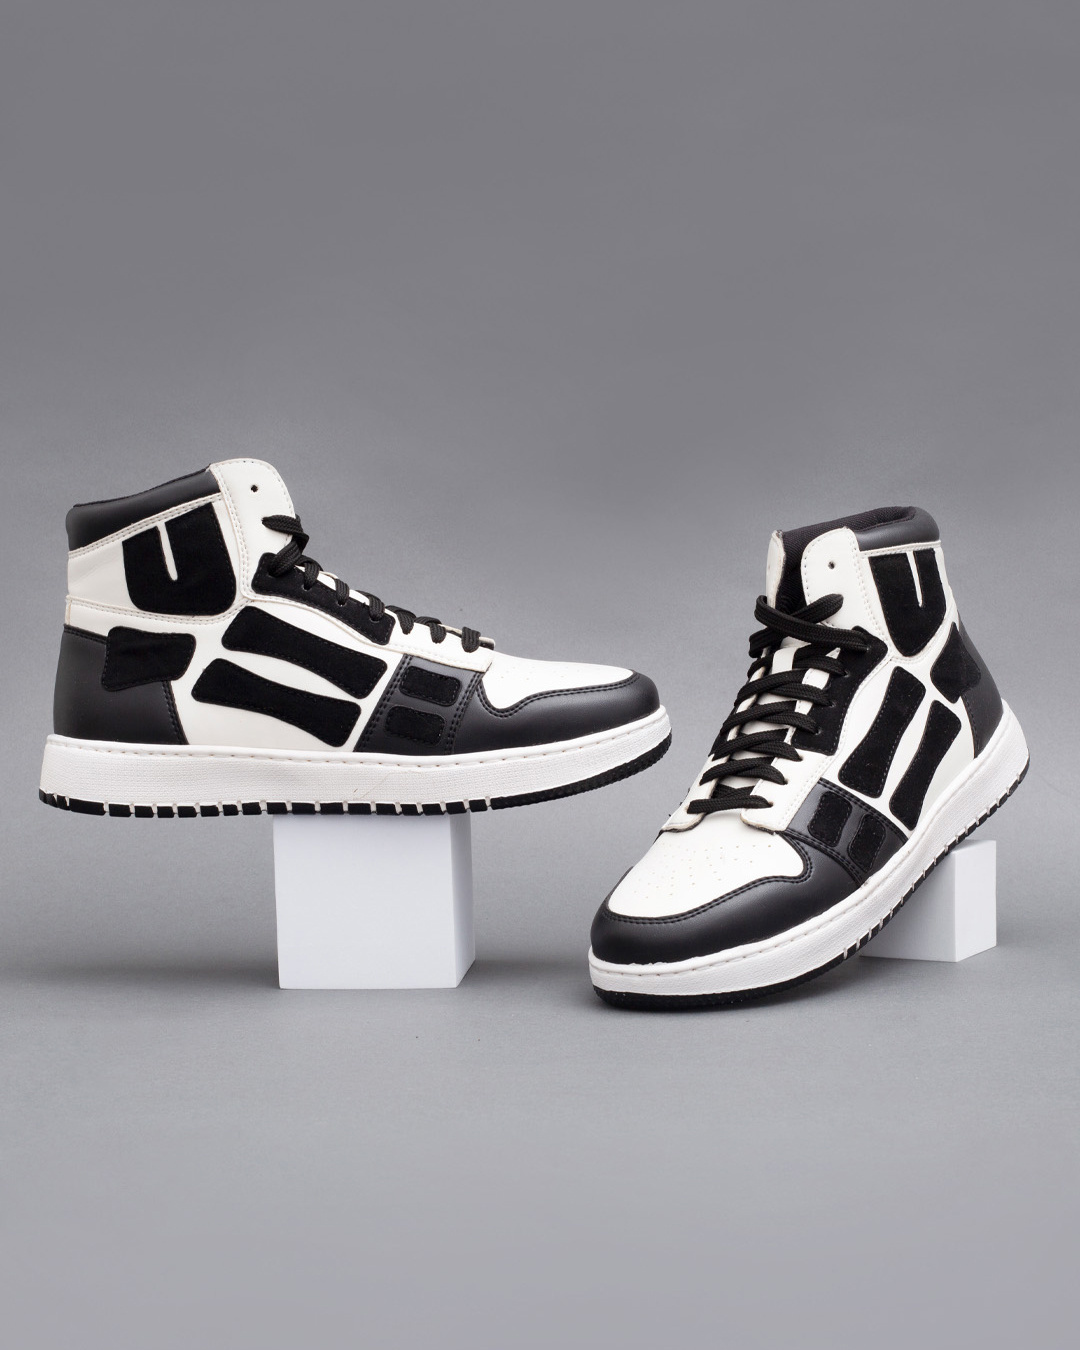 Buy Men's Black & White Color Block Sneakers Online in India at Bewakoof